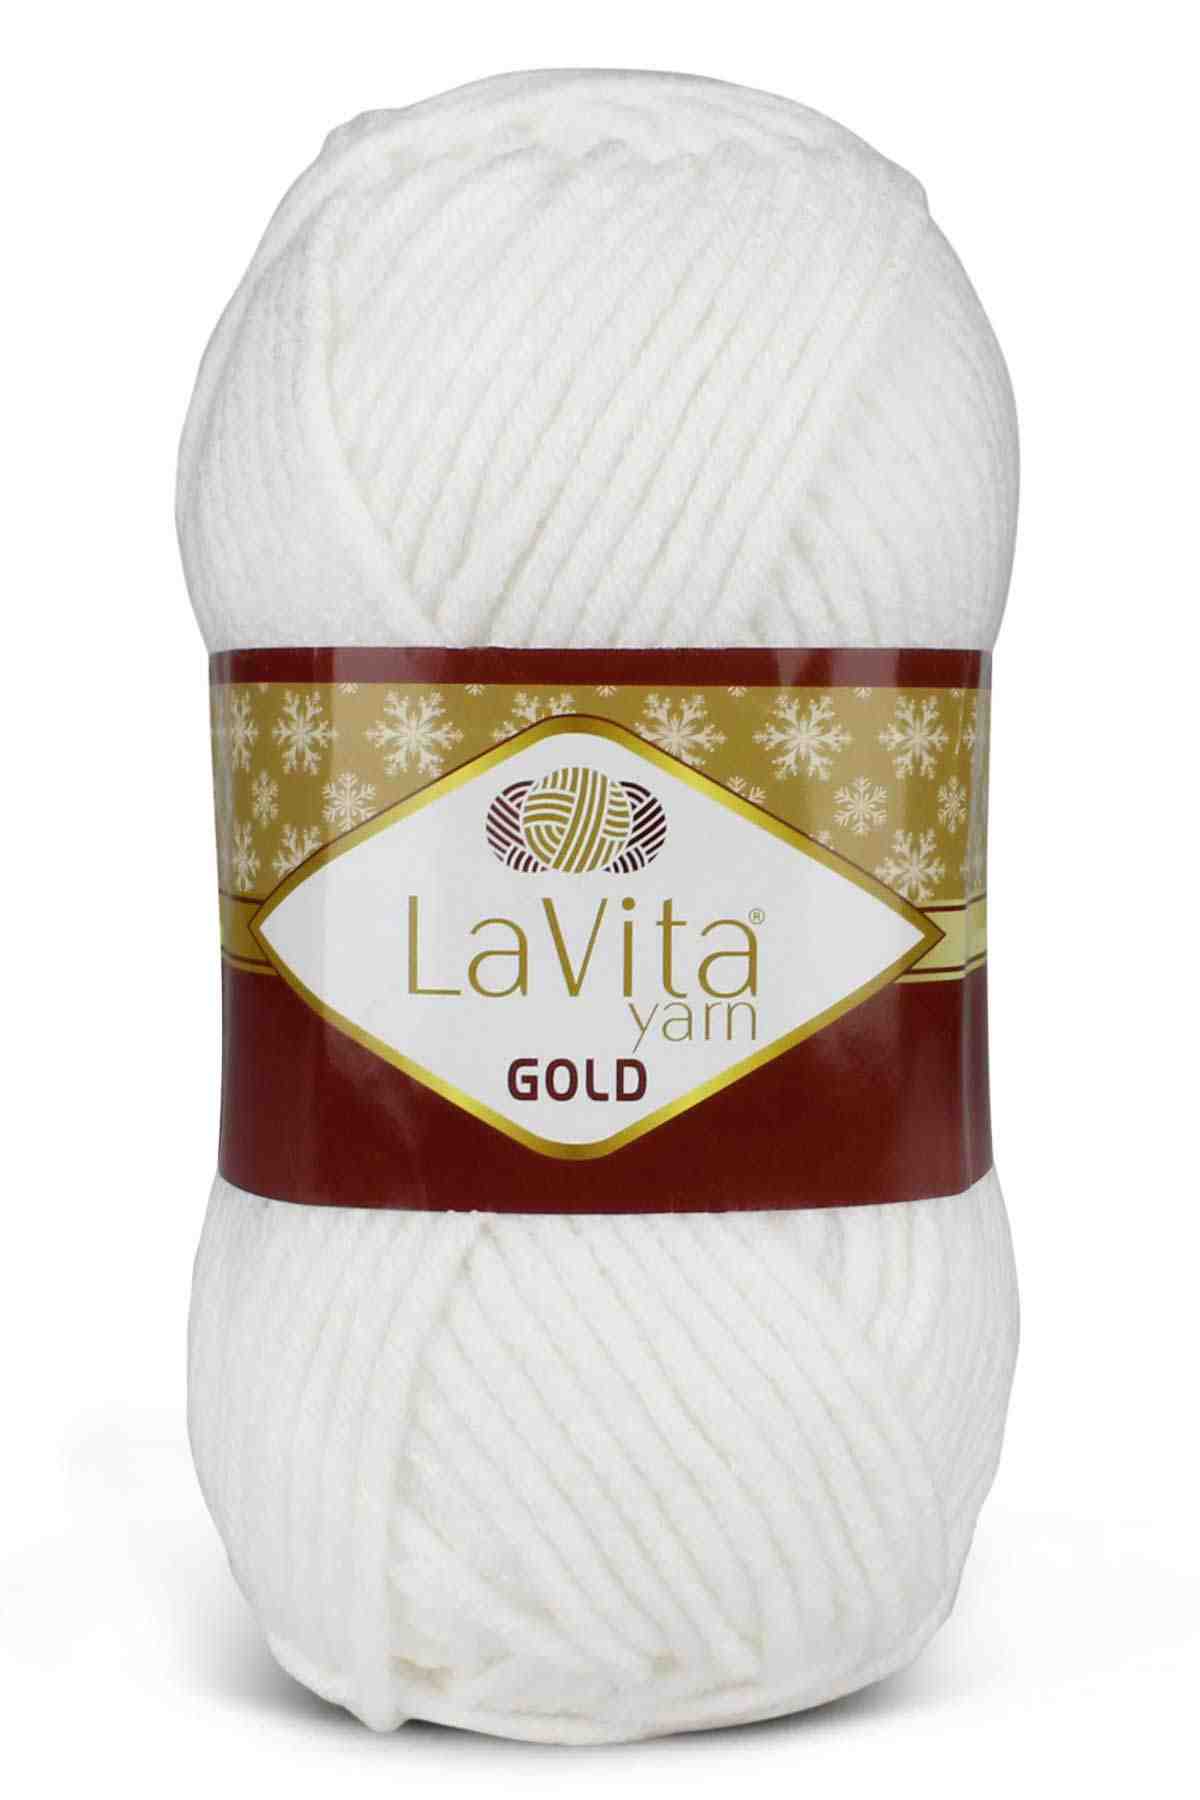 Lavita Gold Acrylic Yarn